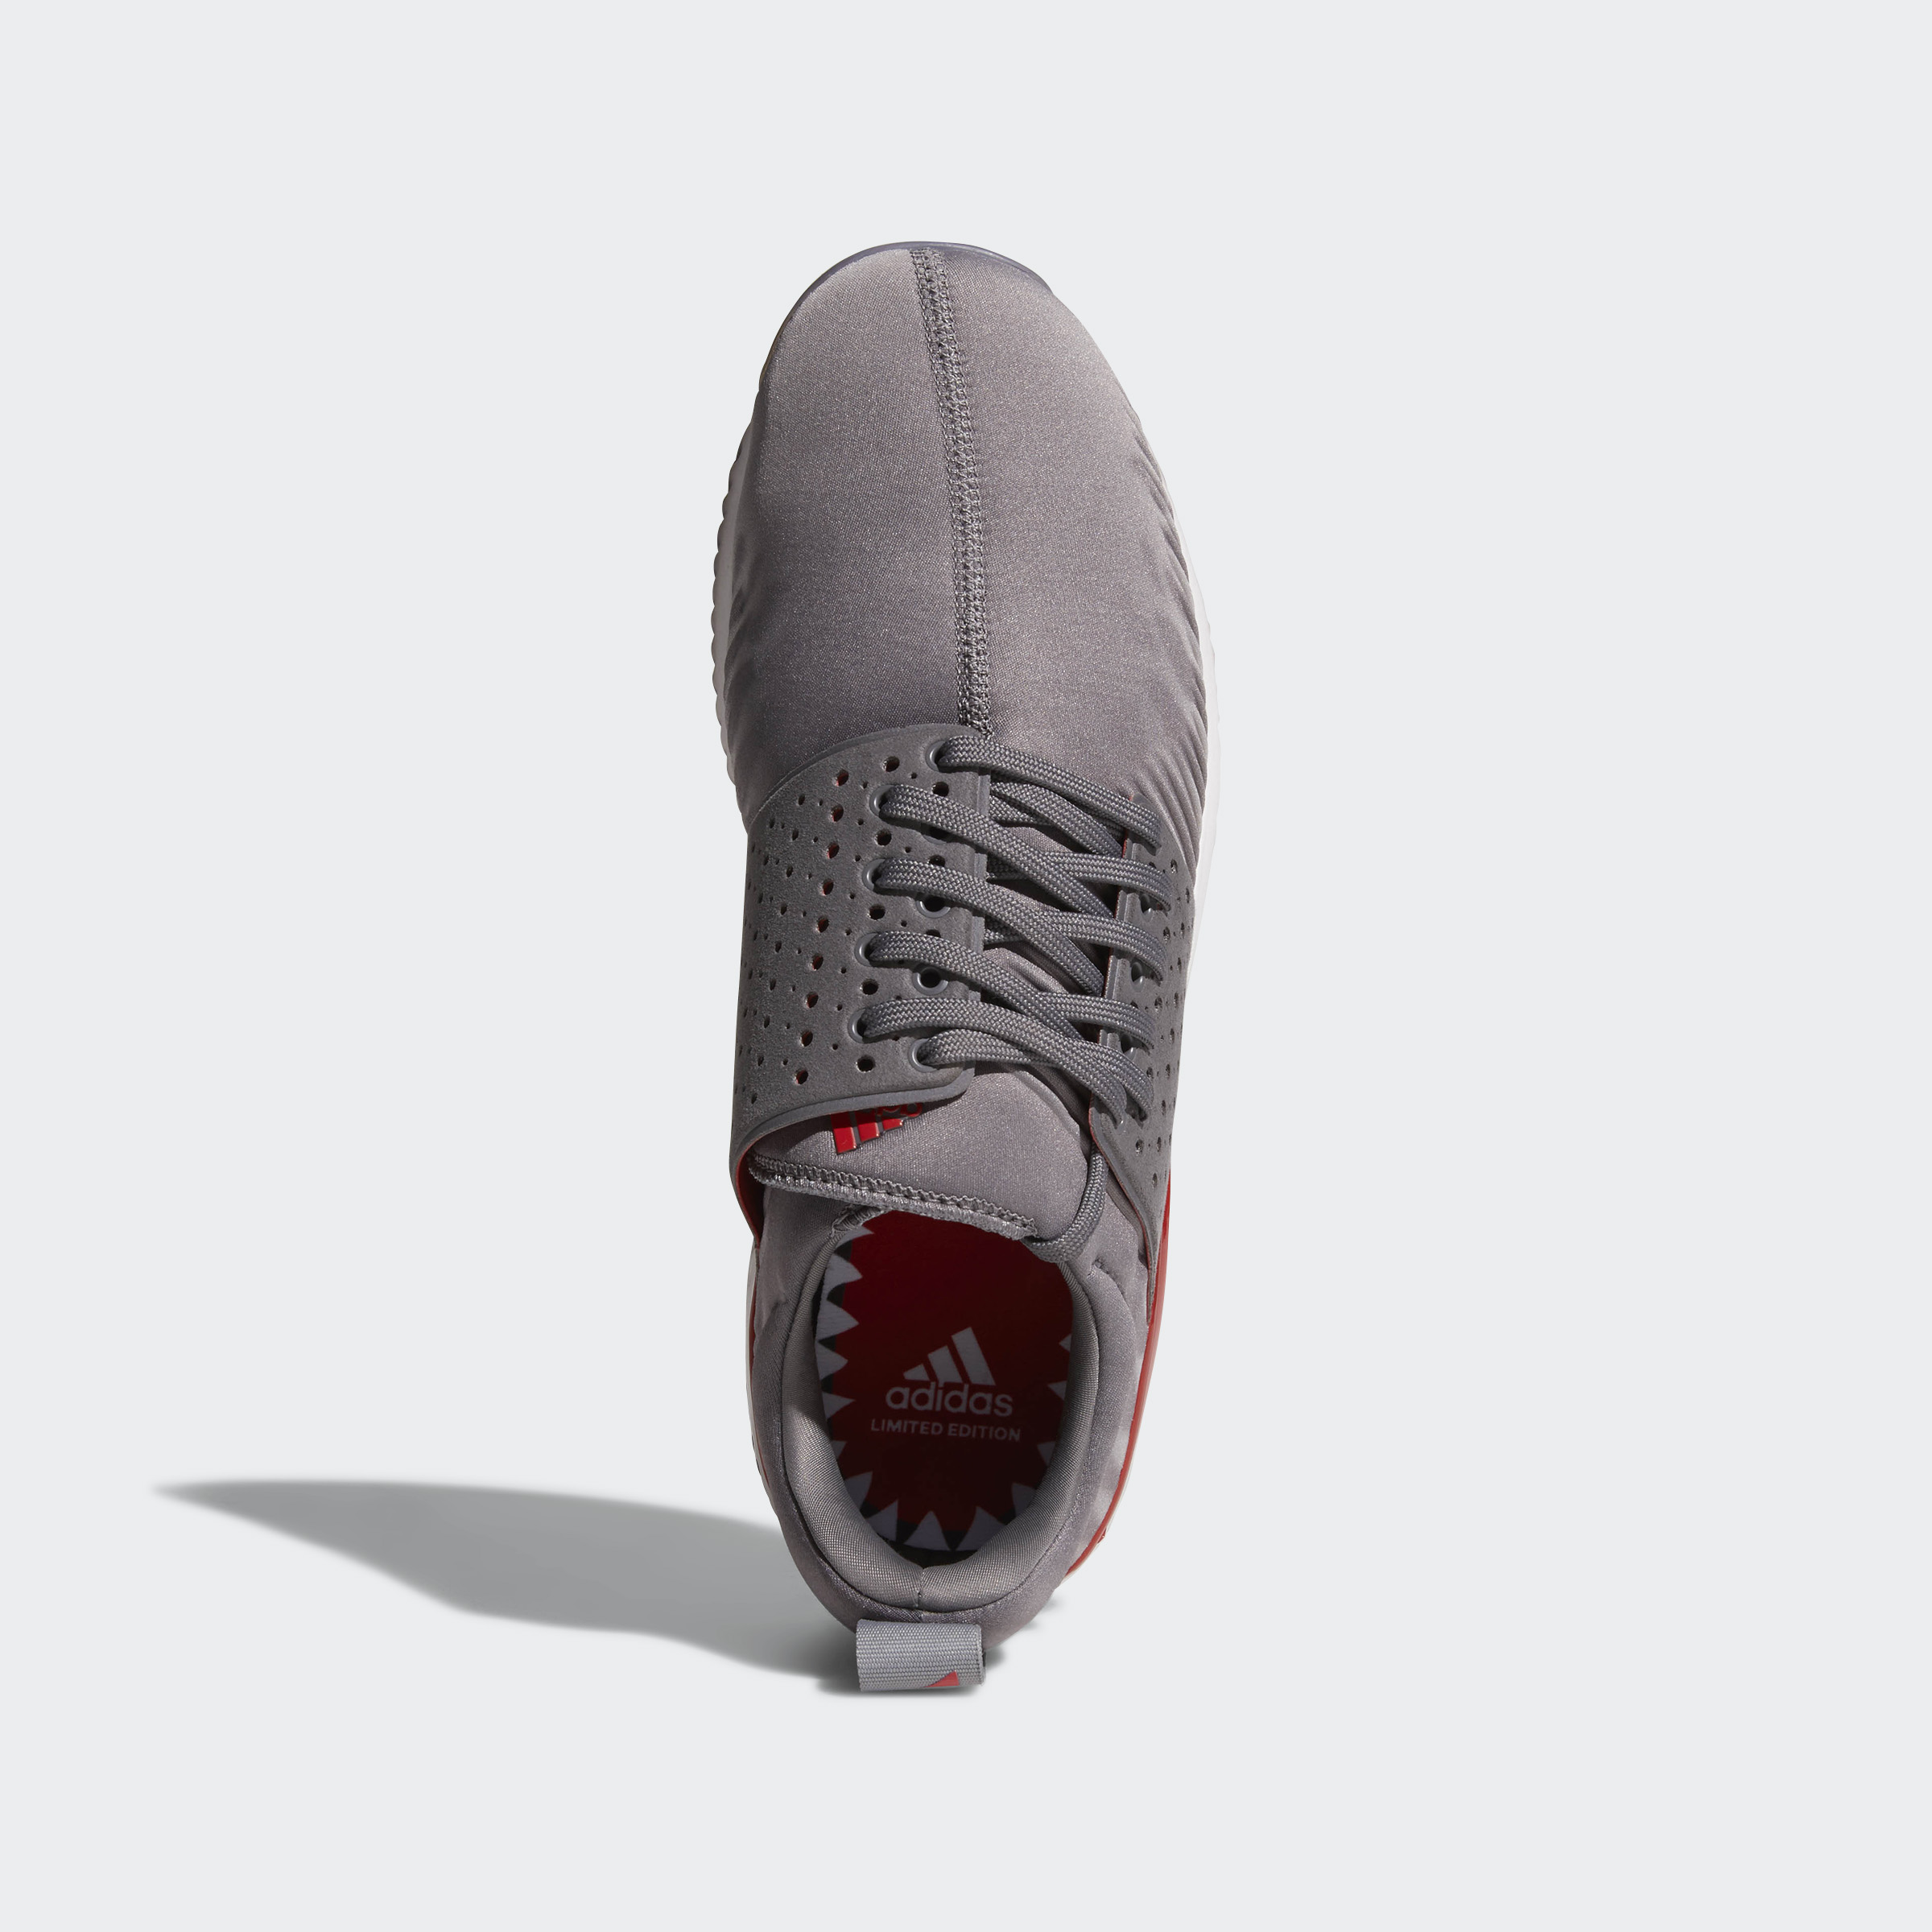 adidas shark shoes 2018